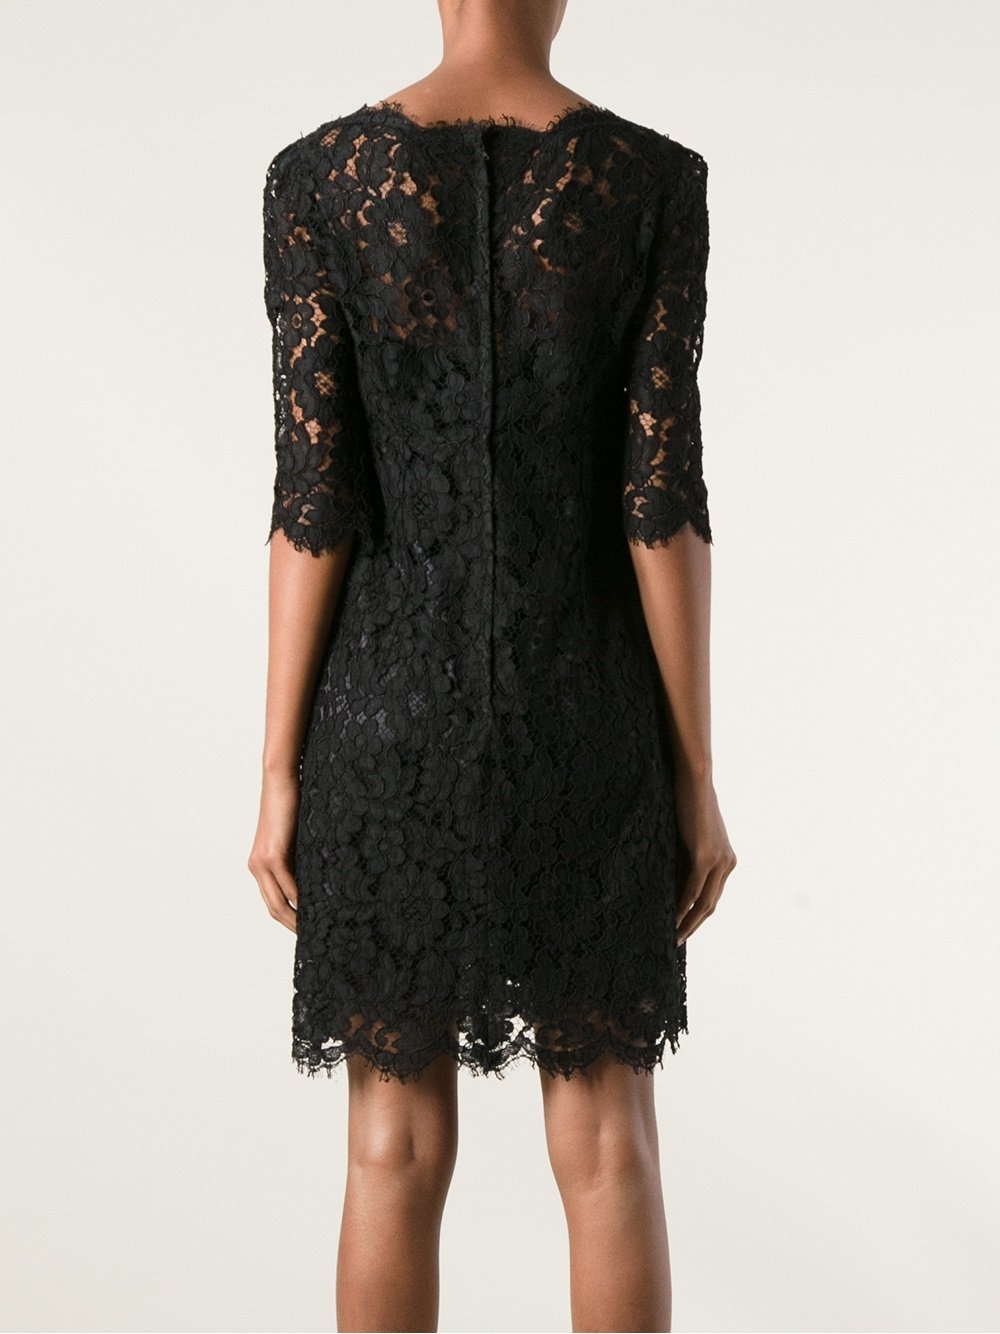 Lyst - Dolce & Gabbana Lace Mini Dress in Black